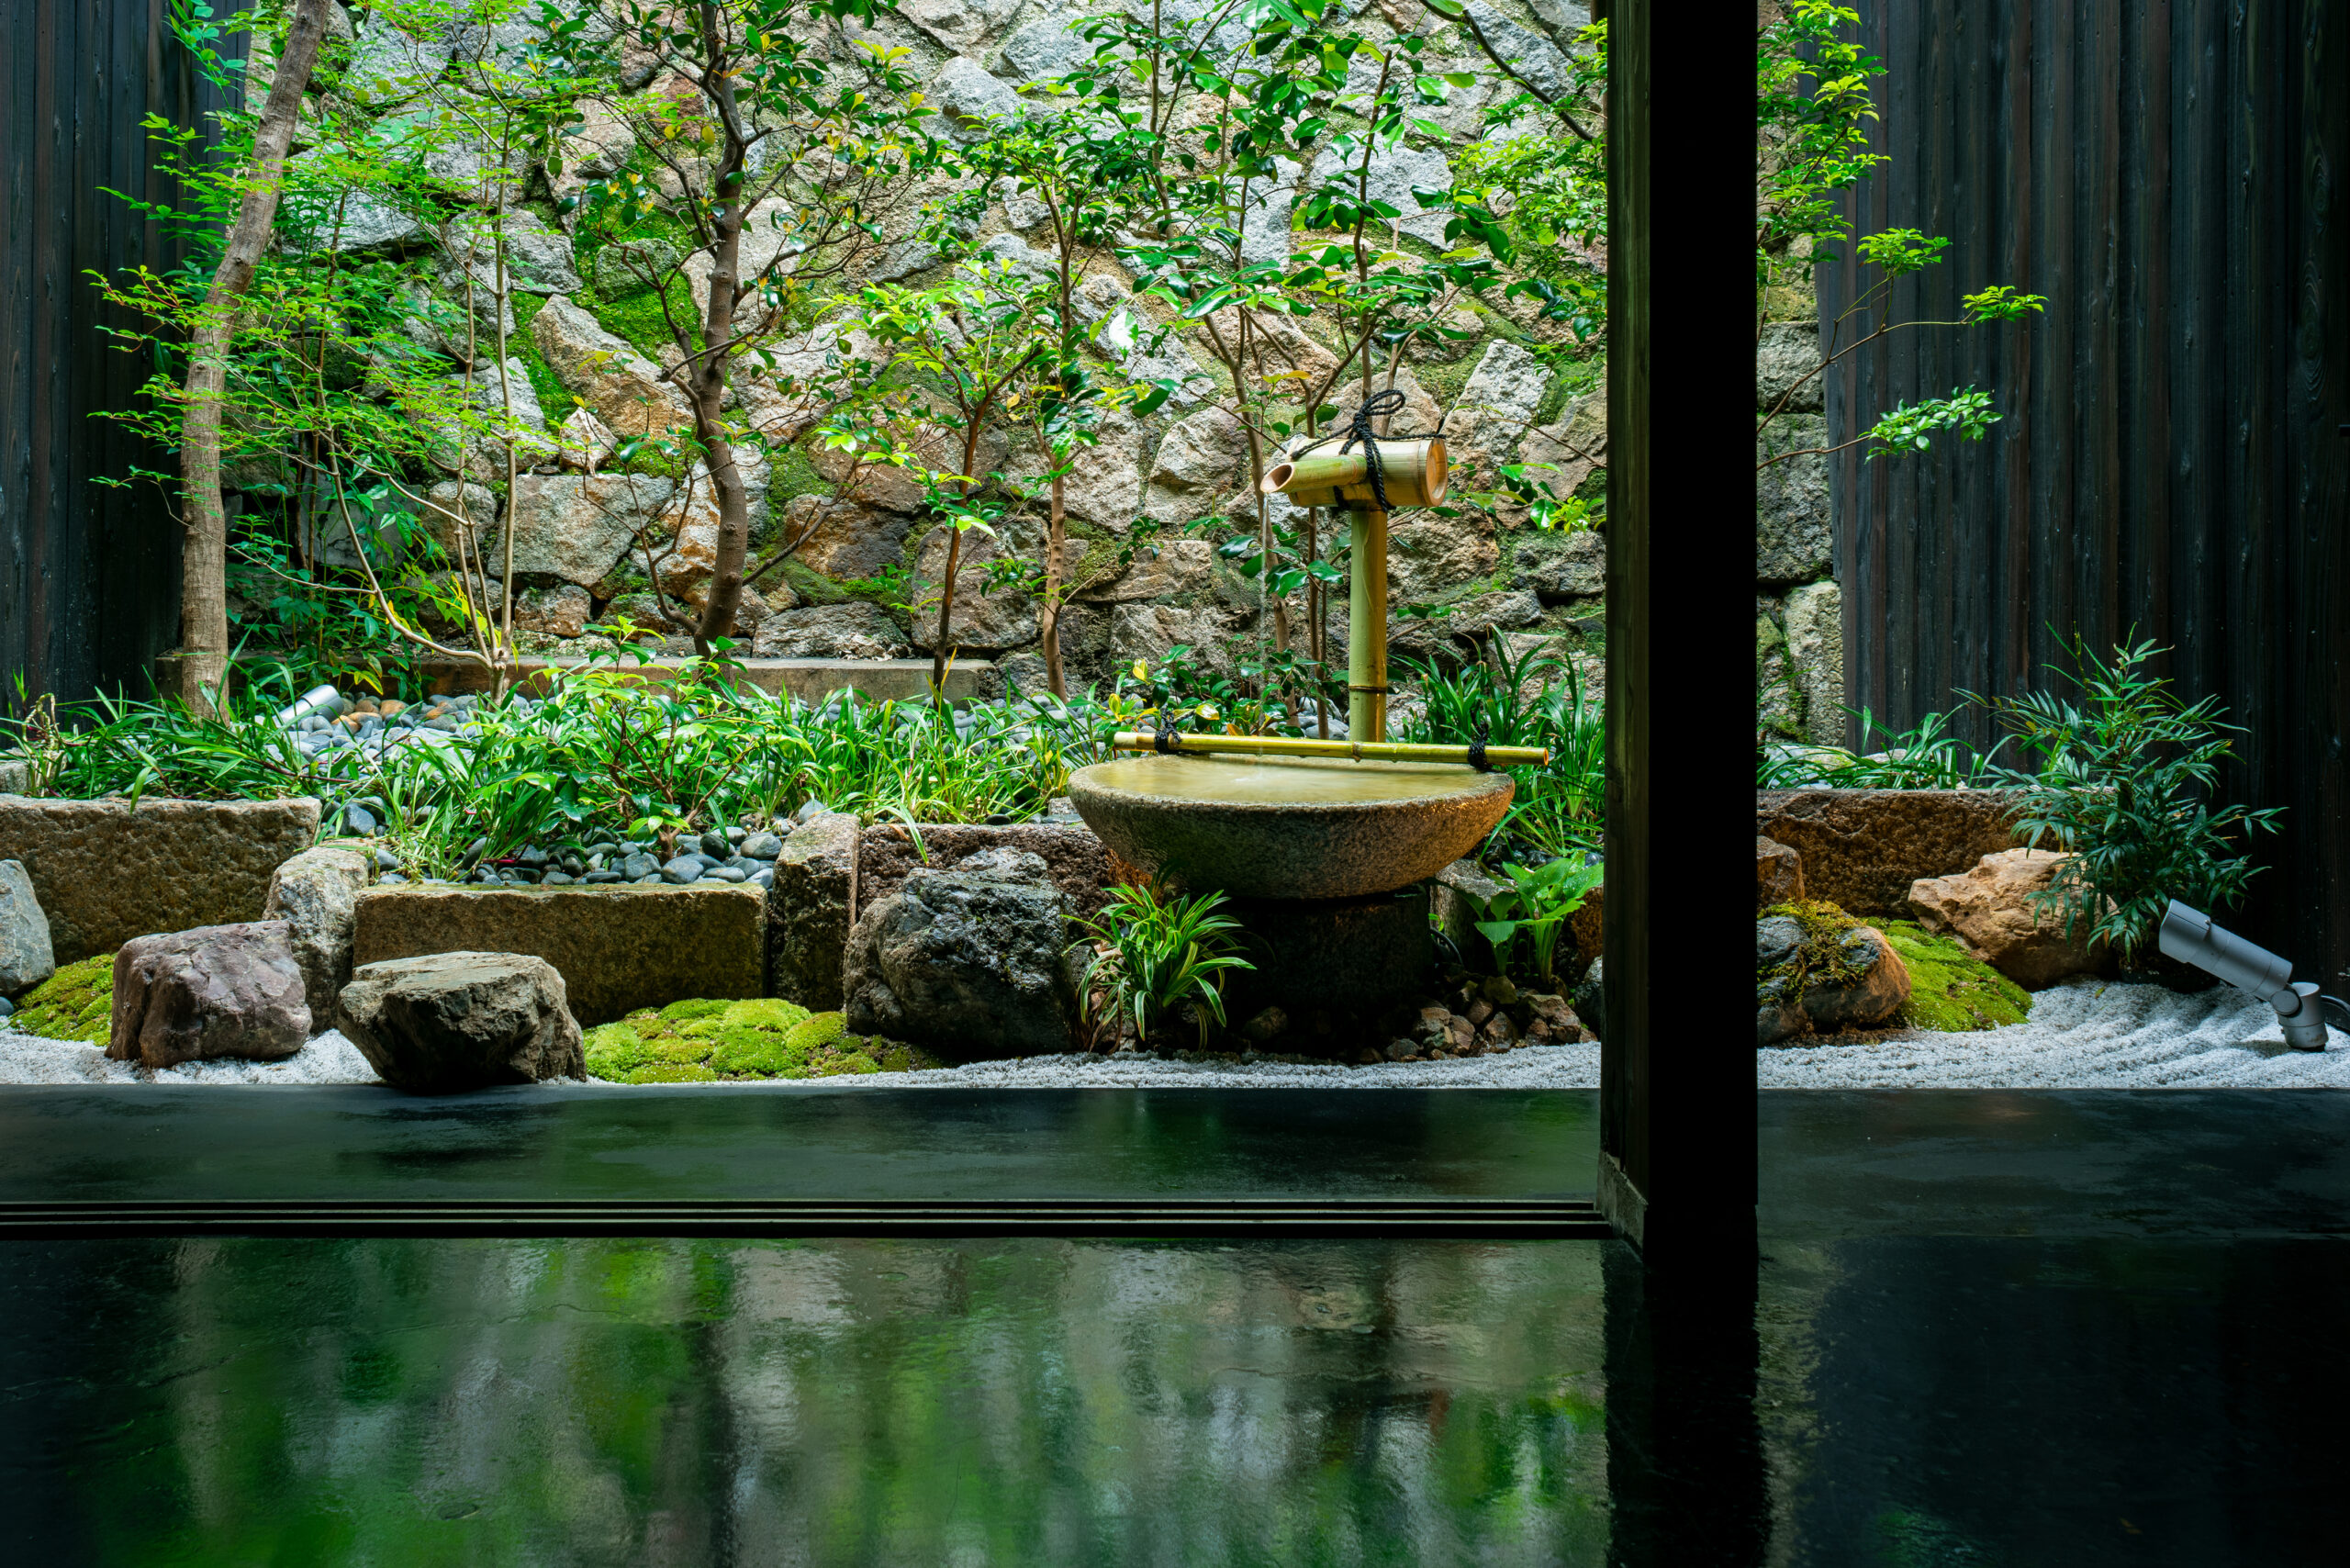 Tsuboniwa Garden Reflections – Machiya House Features